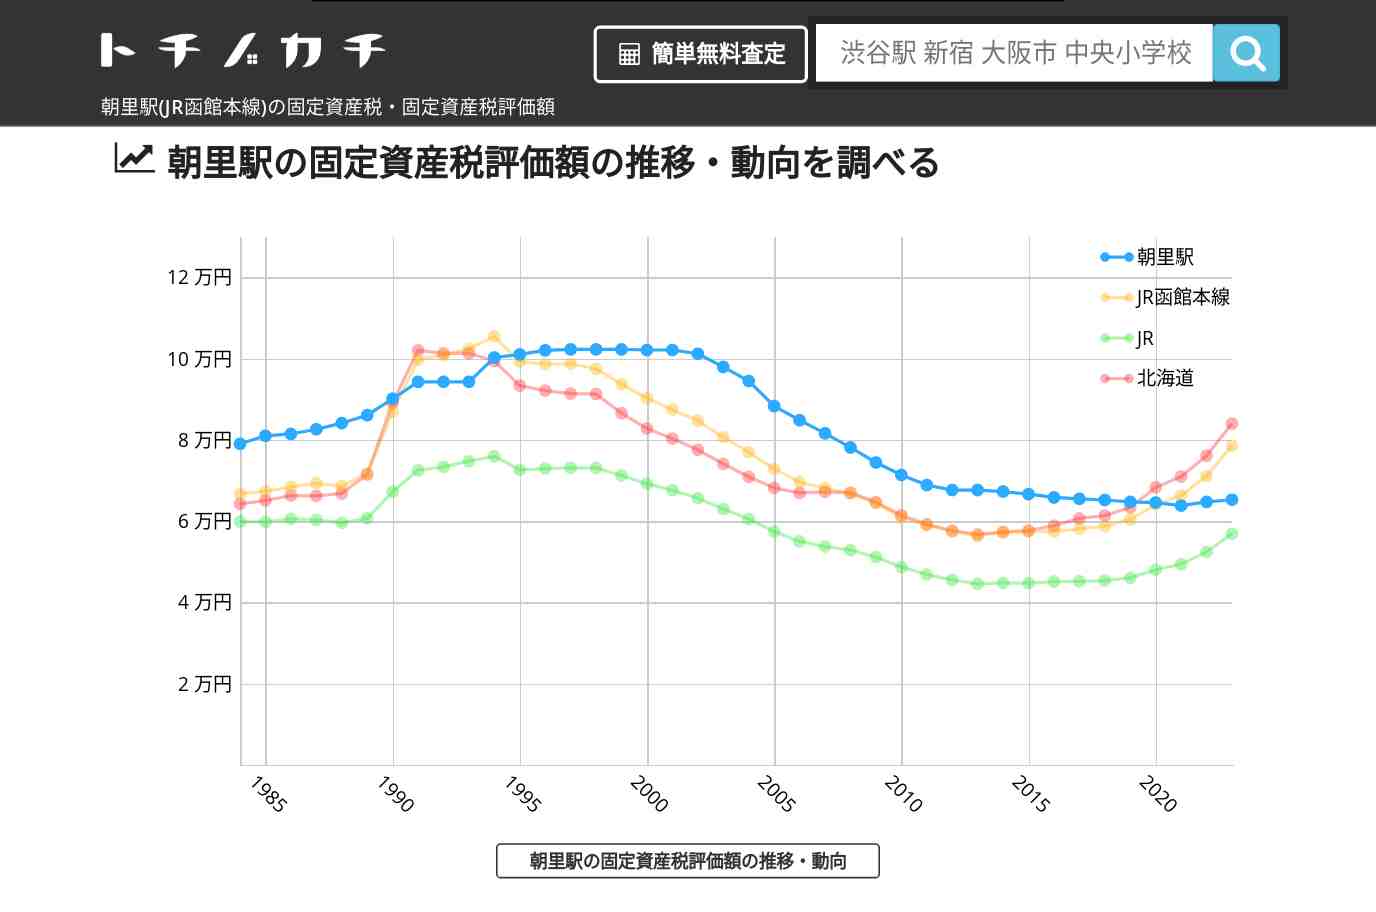 朝里駅(JR函館本線)の固定資産税・固定資産税評価額 | トチノカチ